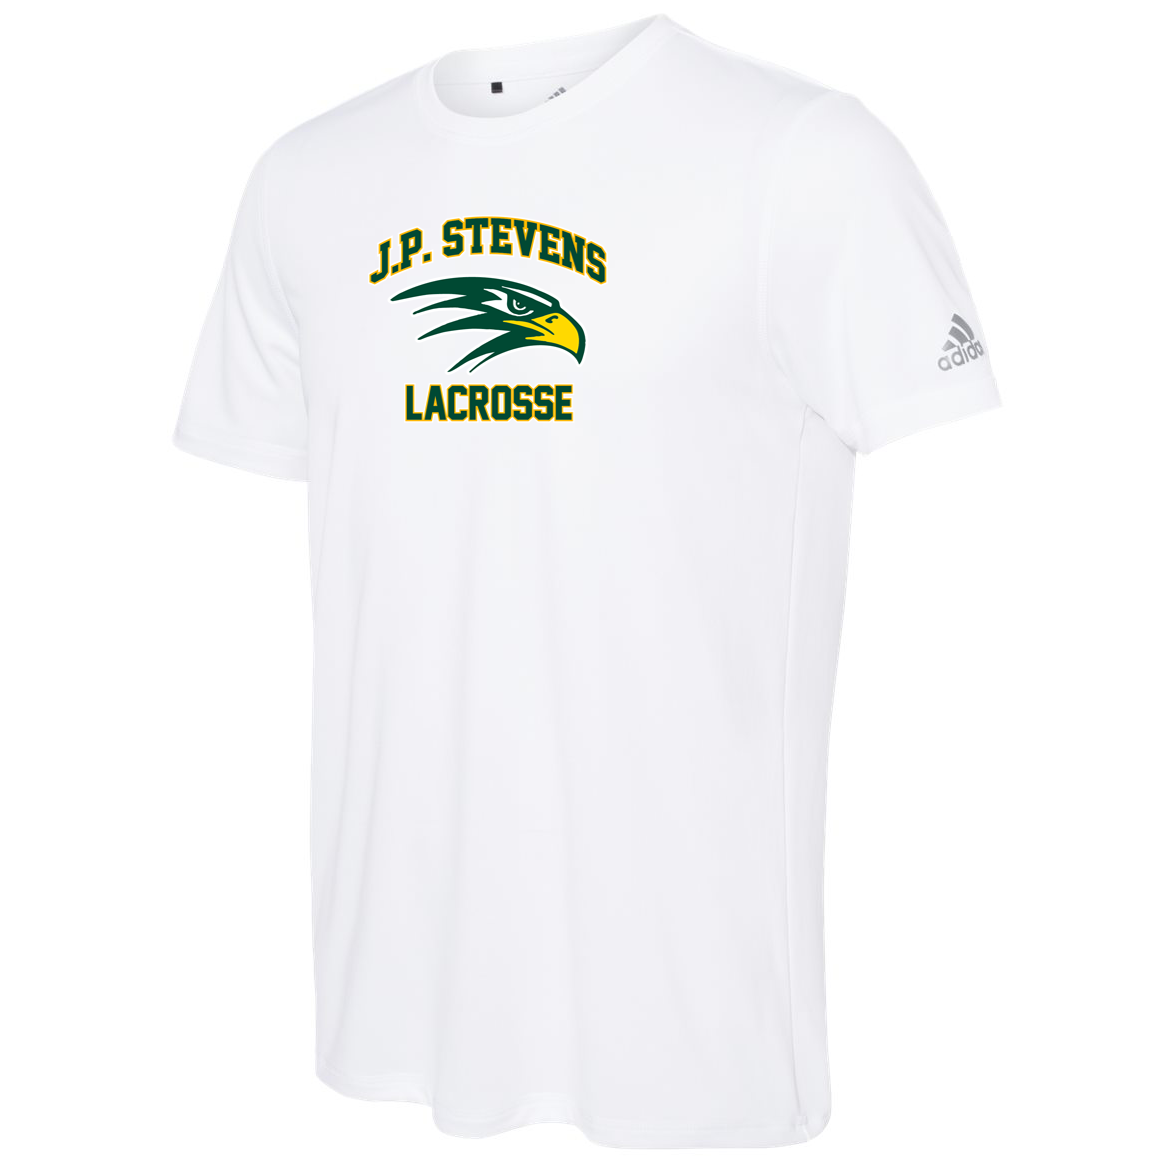 J.P. Stevens Lacrosse Adidas Sport T-Shirt